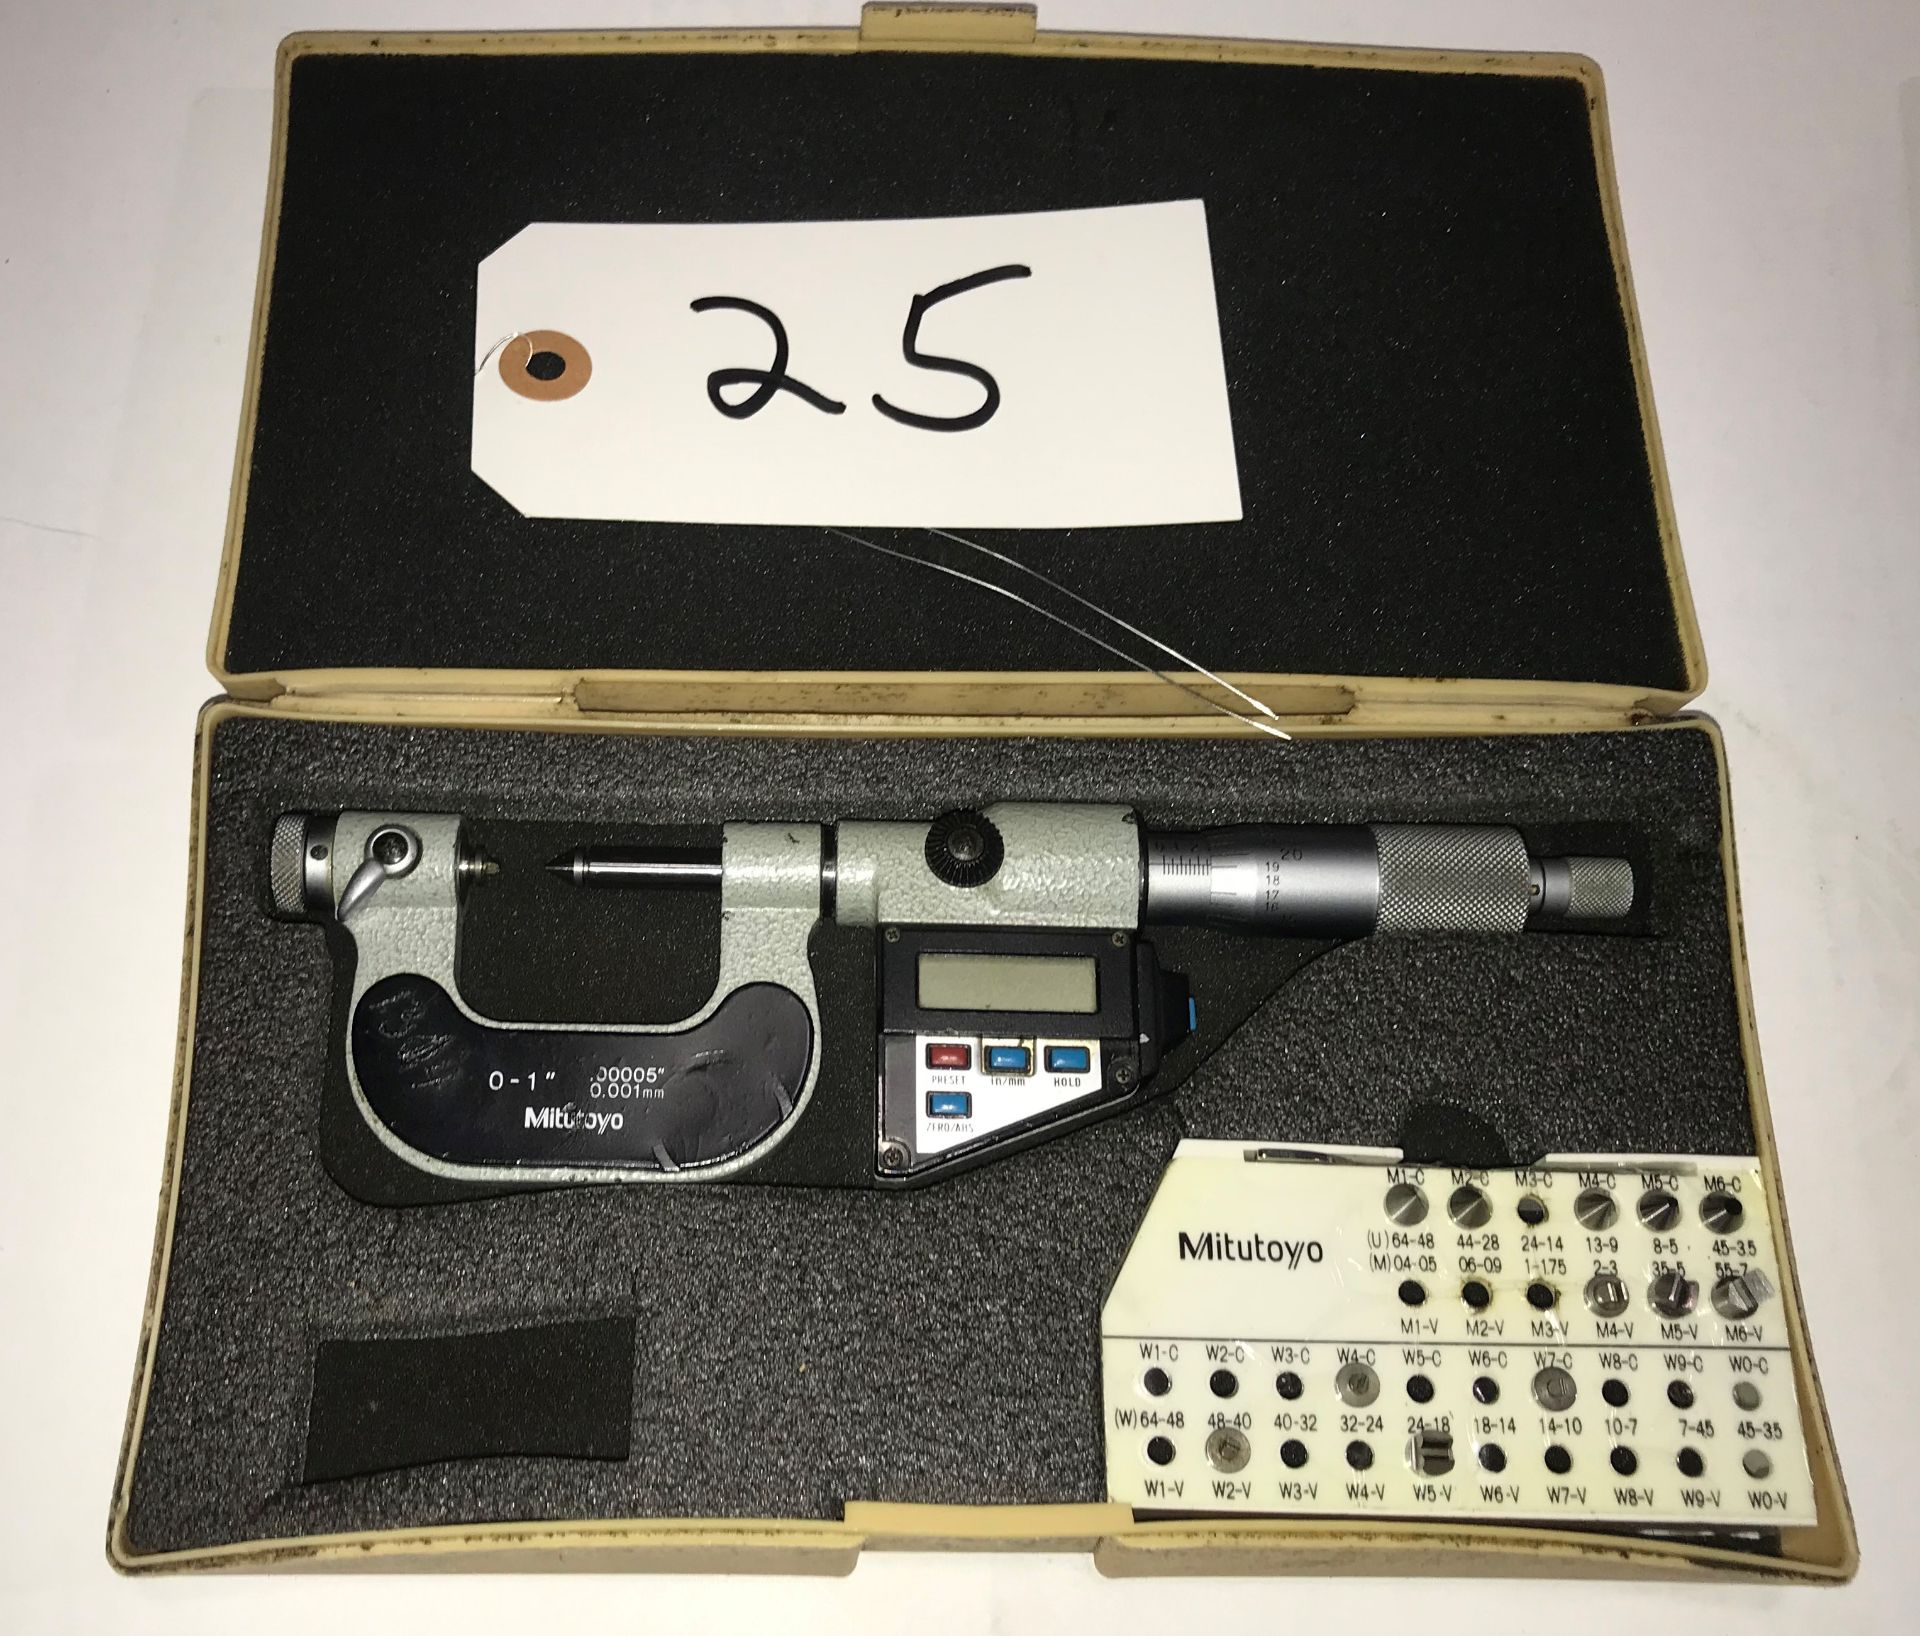 Mitutoyo 0 - 1" Digital Pitch Micrometer